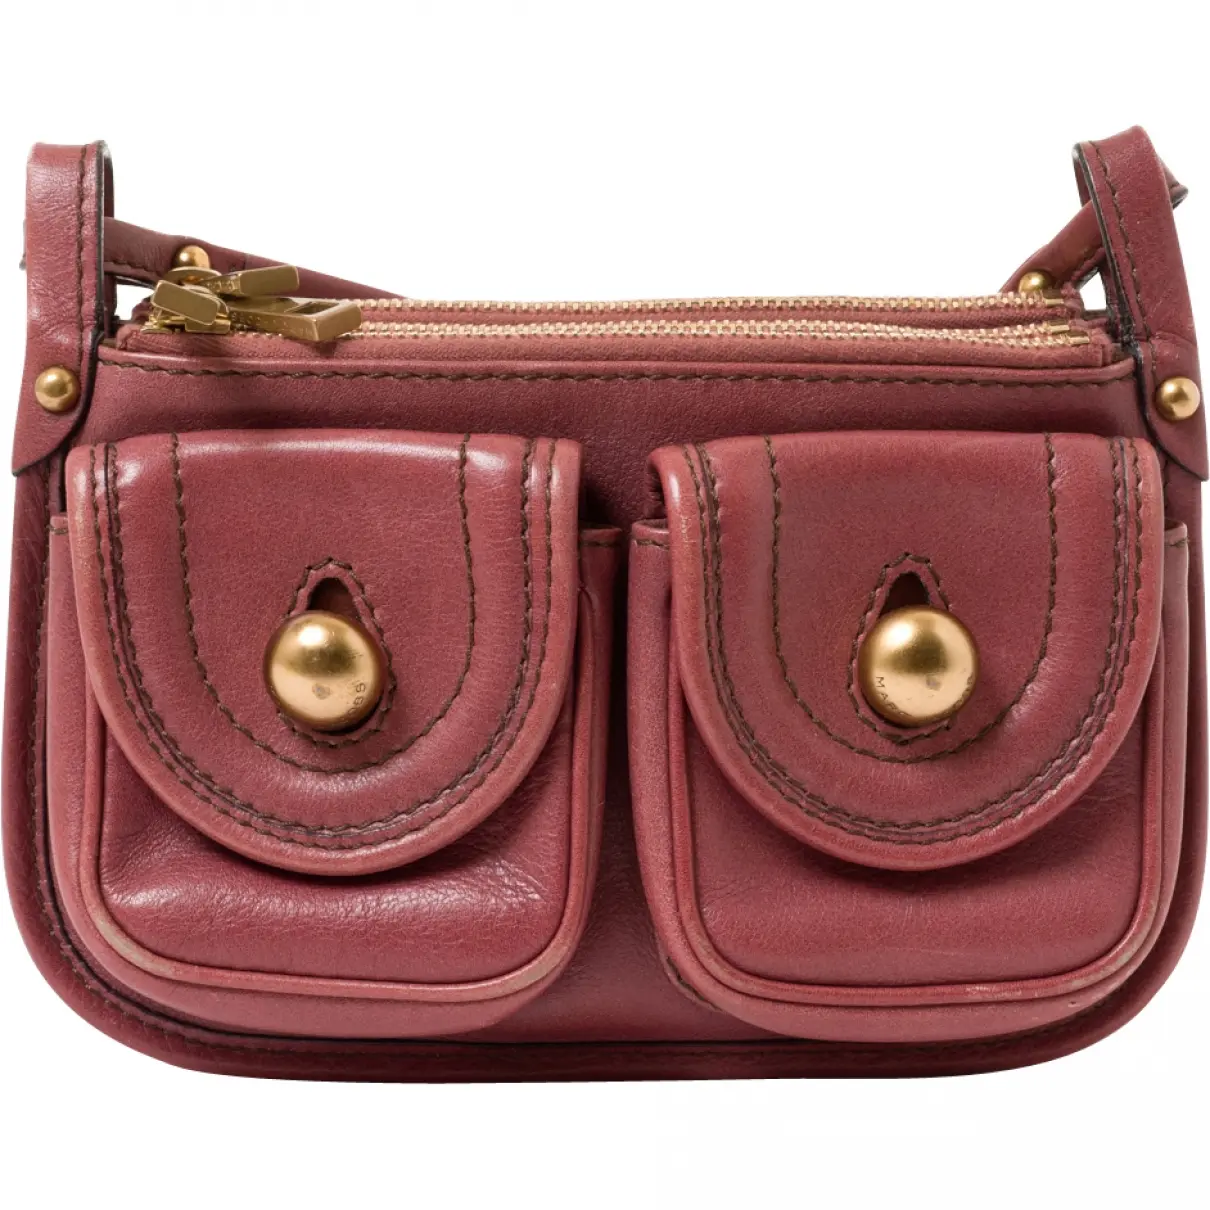 Pink Leather Handbag Marc Jacobs